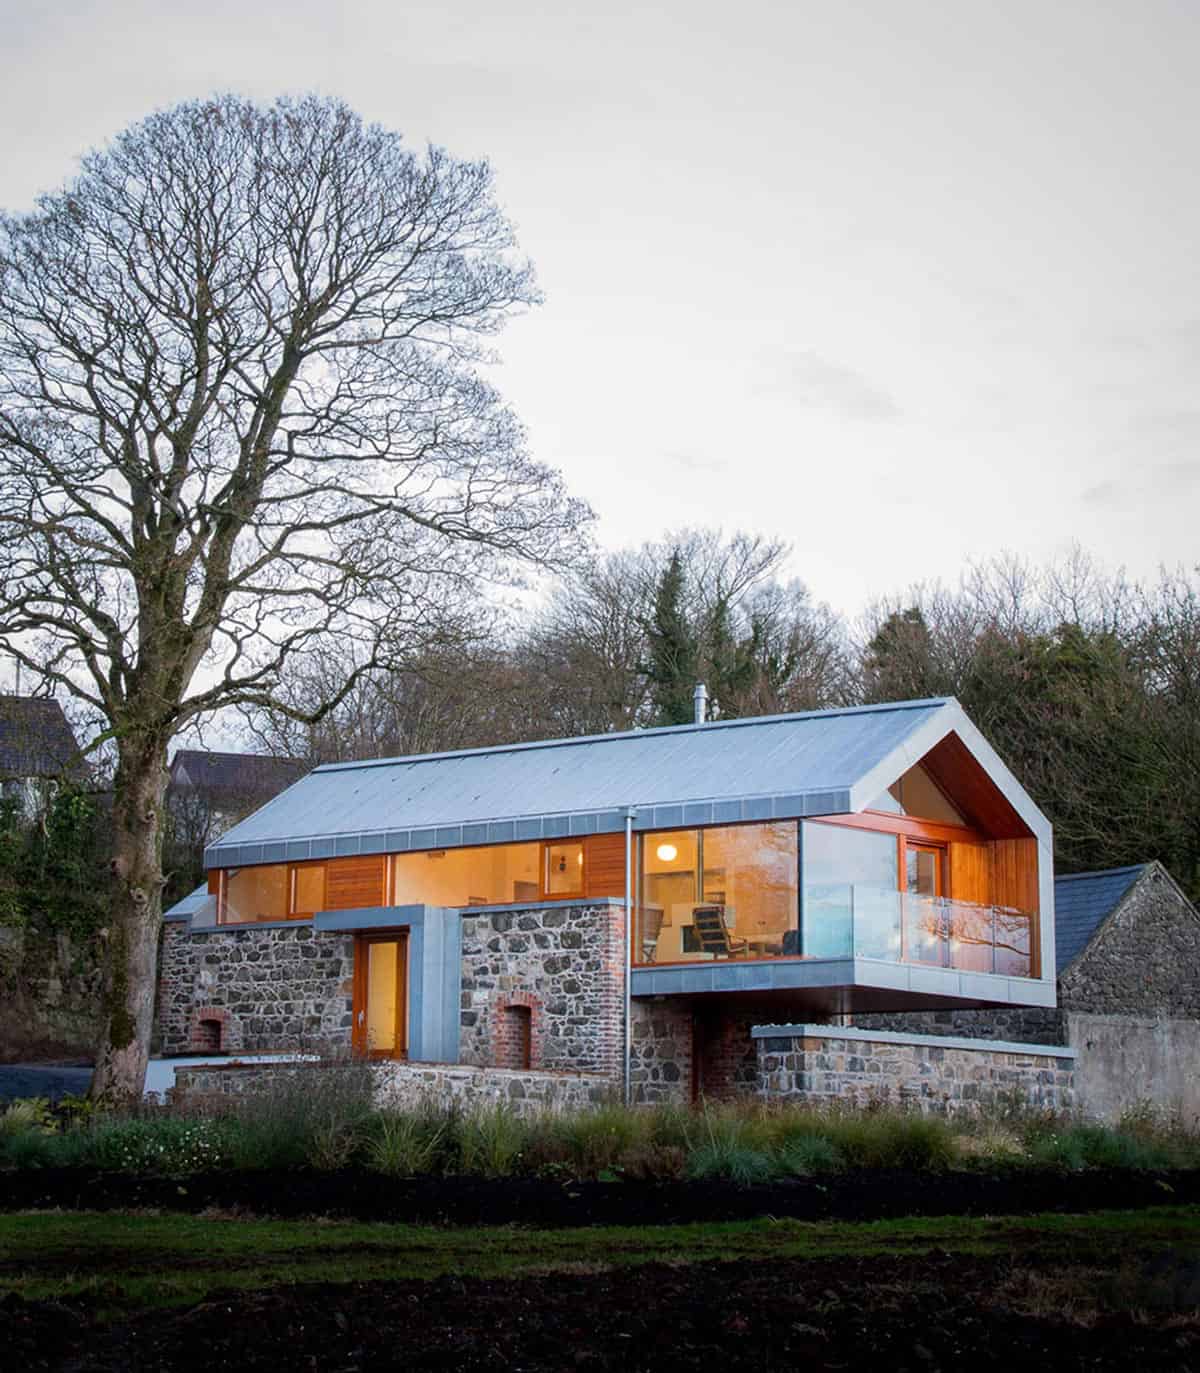 barn-style-house-irleand-cantilvered.jpg